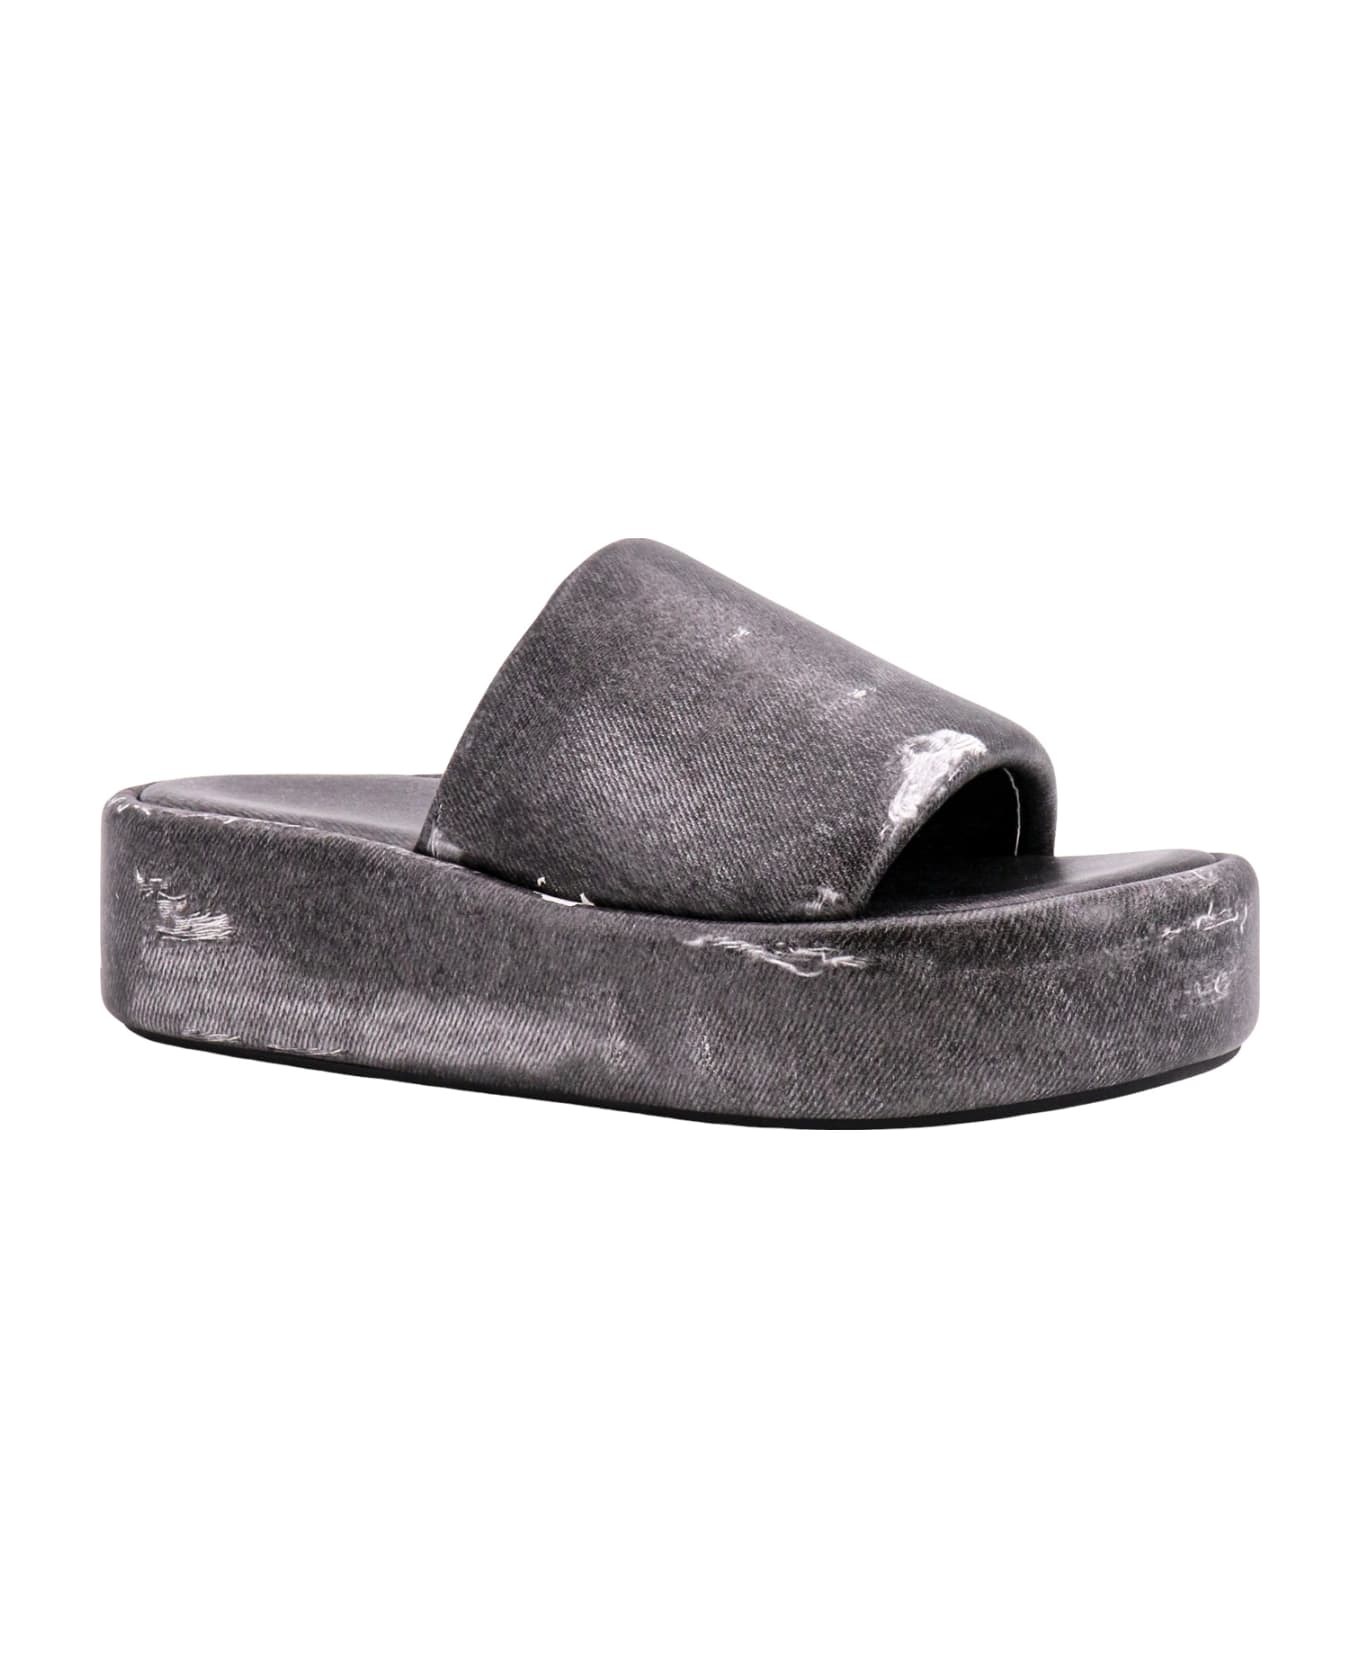 Balenciaga Slide Sandals - Black サンダル